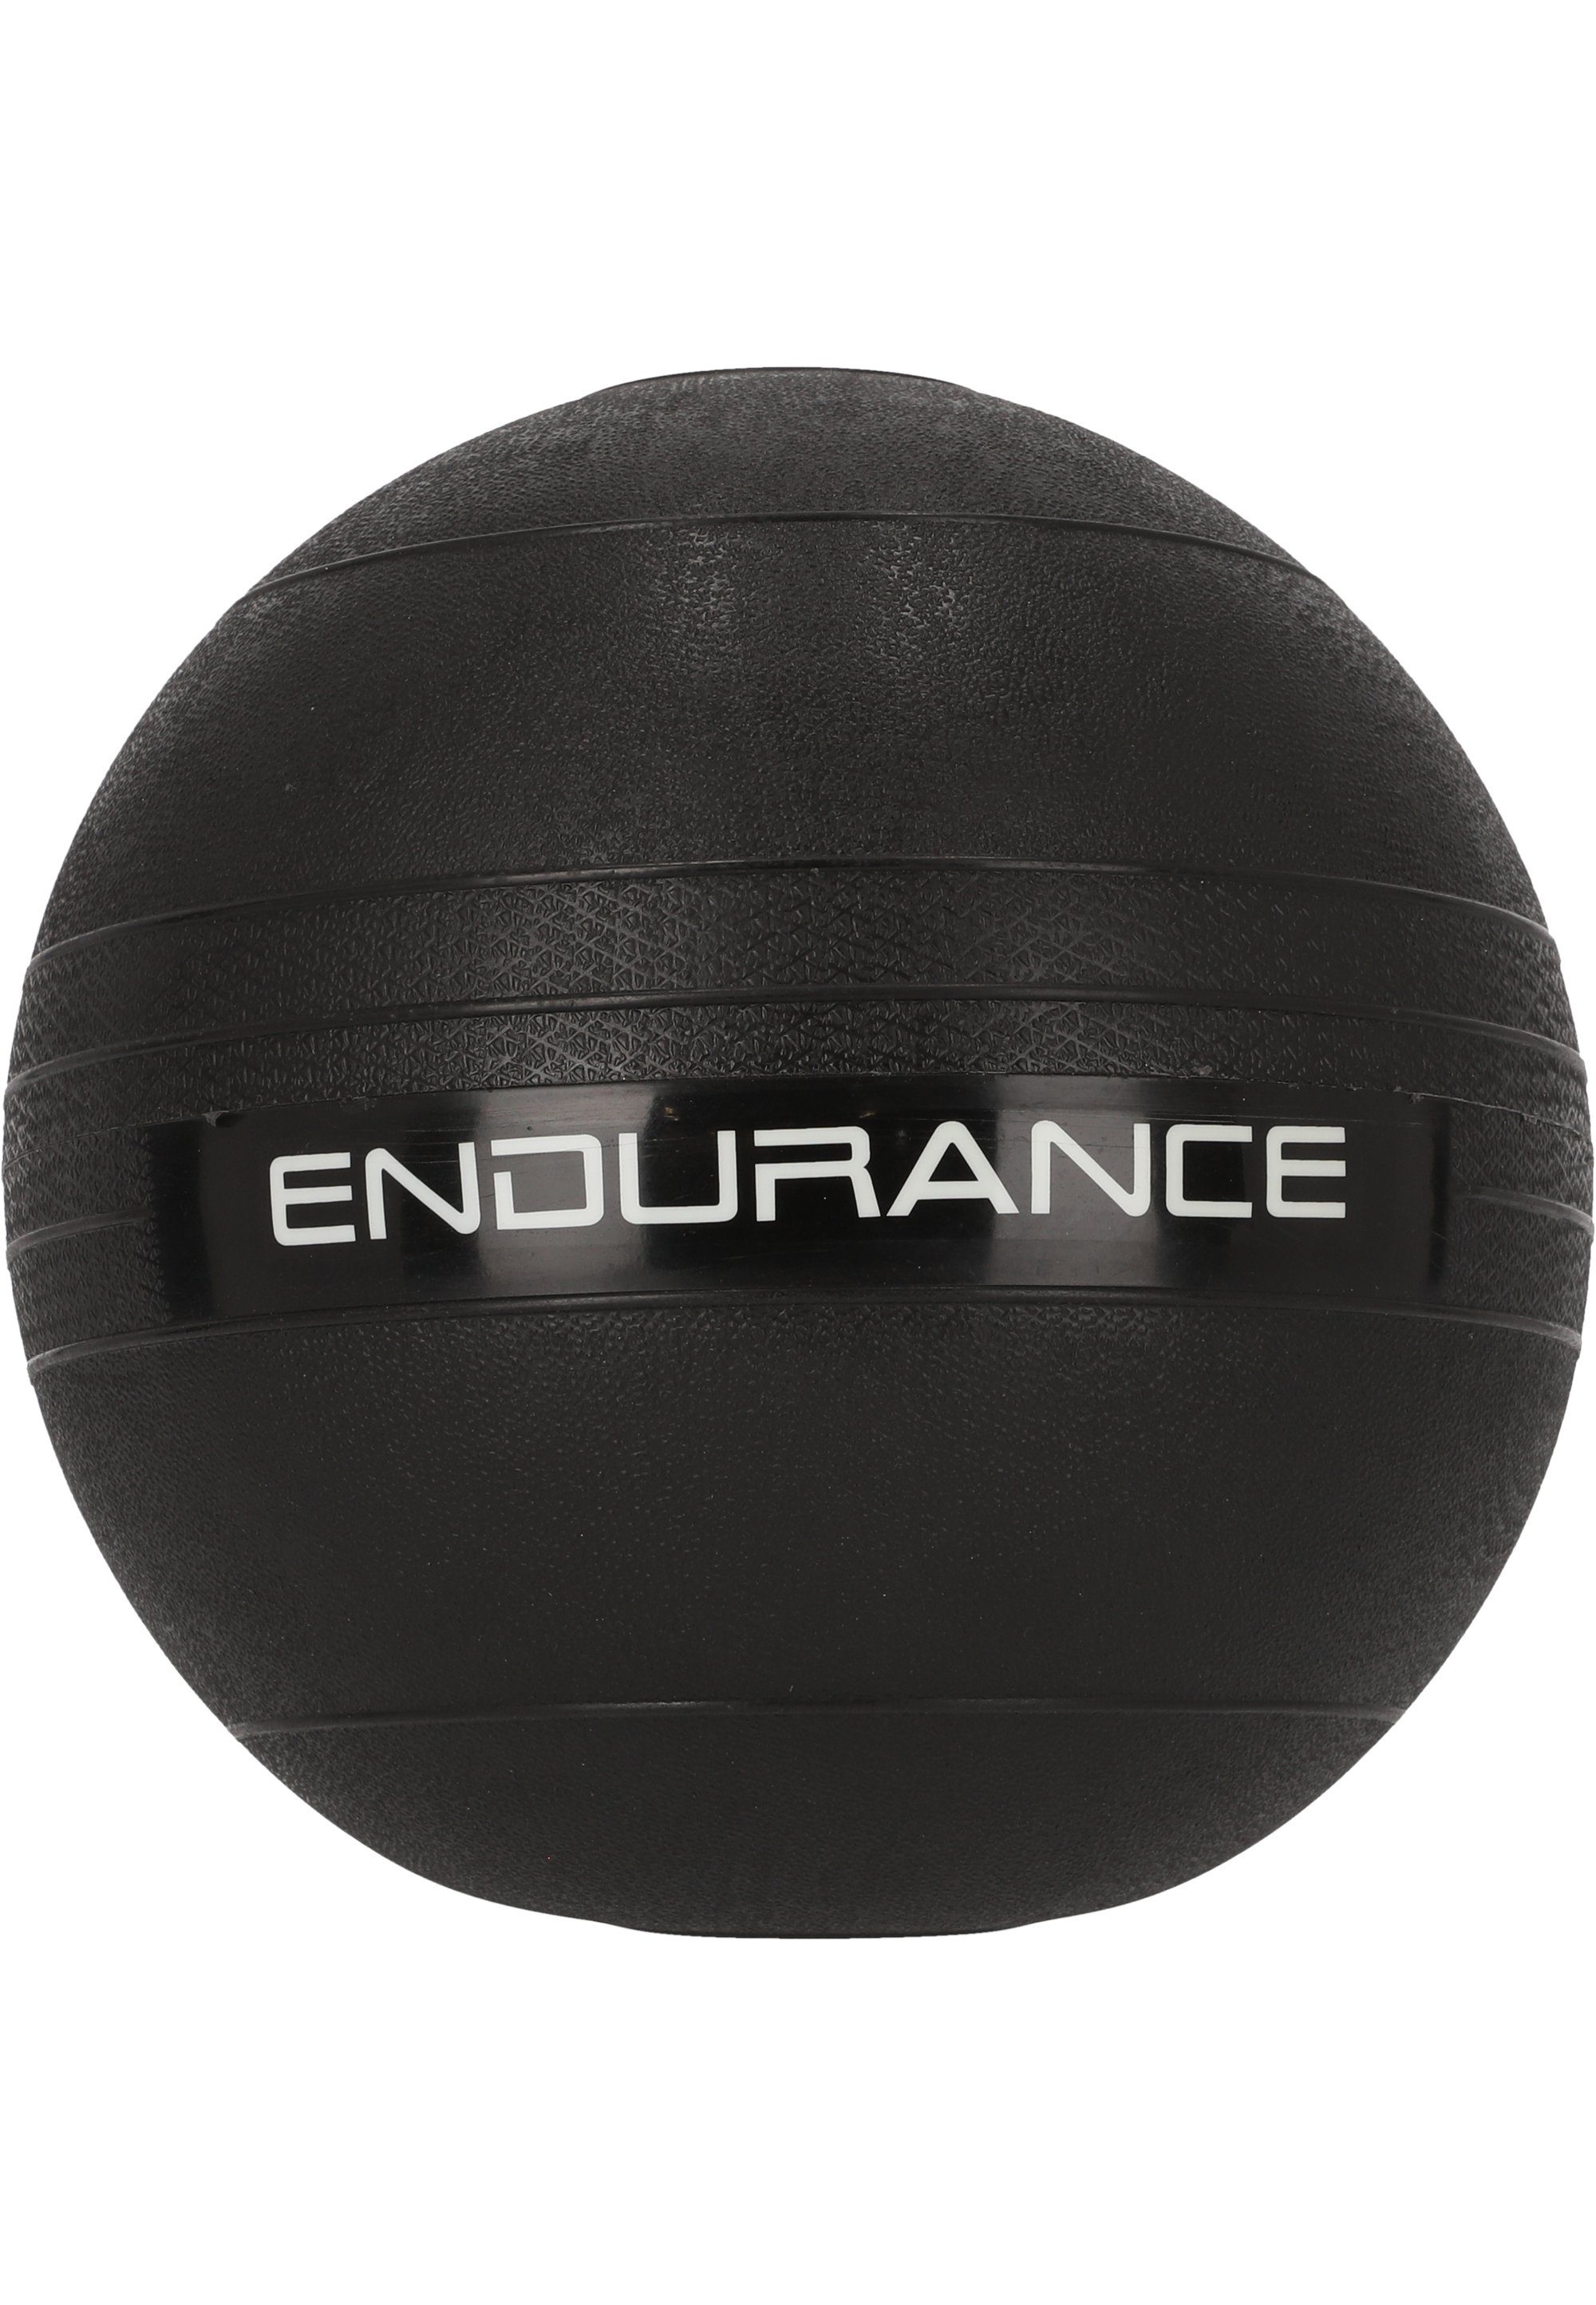 ENDURANCE einfarbigem Gymnastikball, Design in